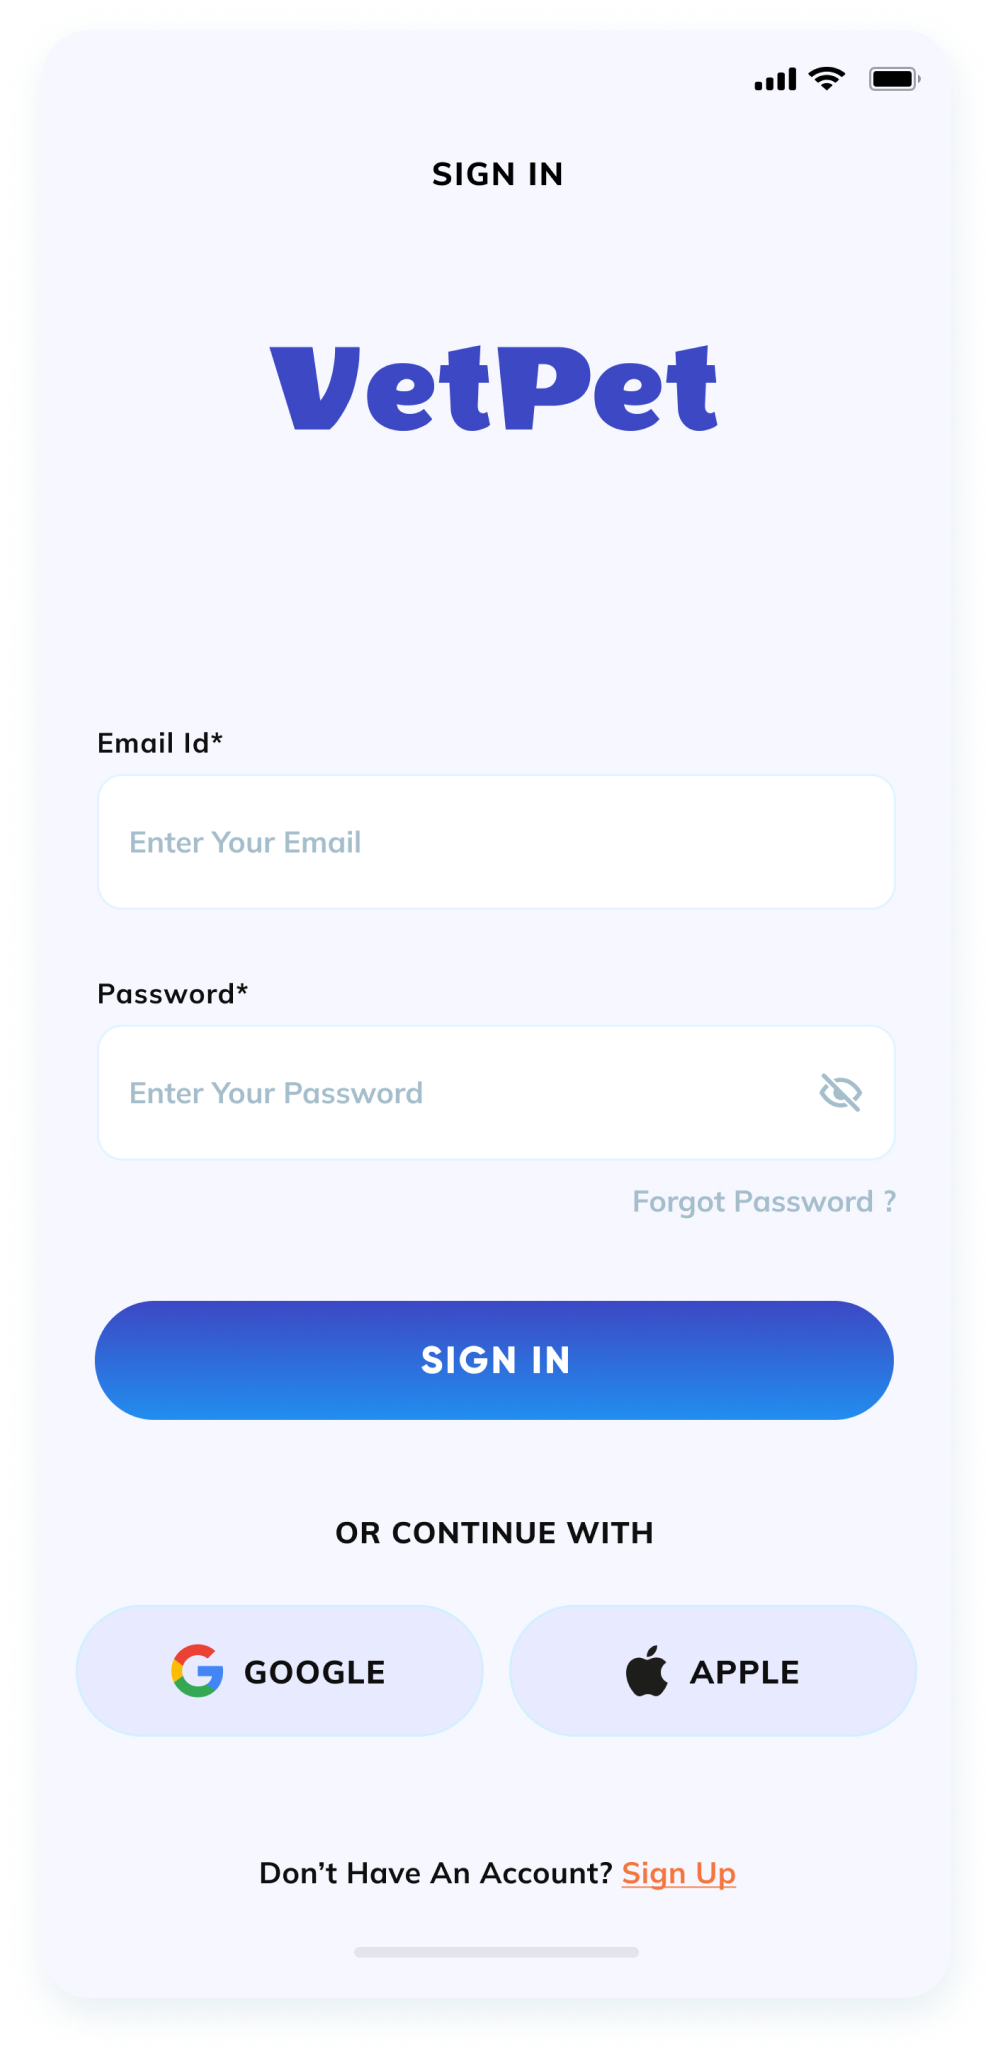  UI design of the VetPet app's sign-in screen 